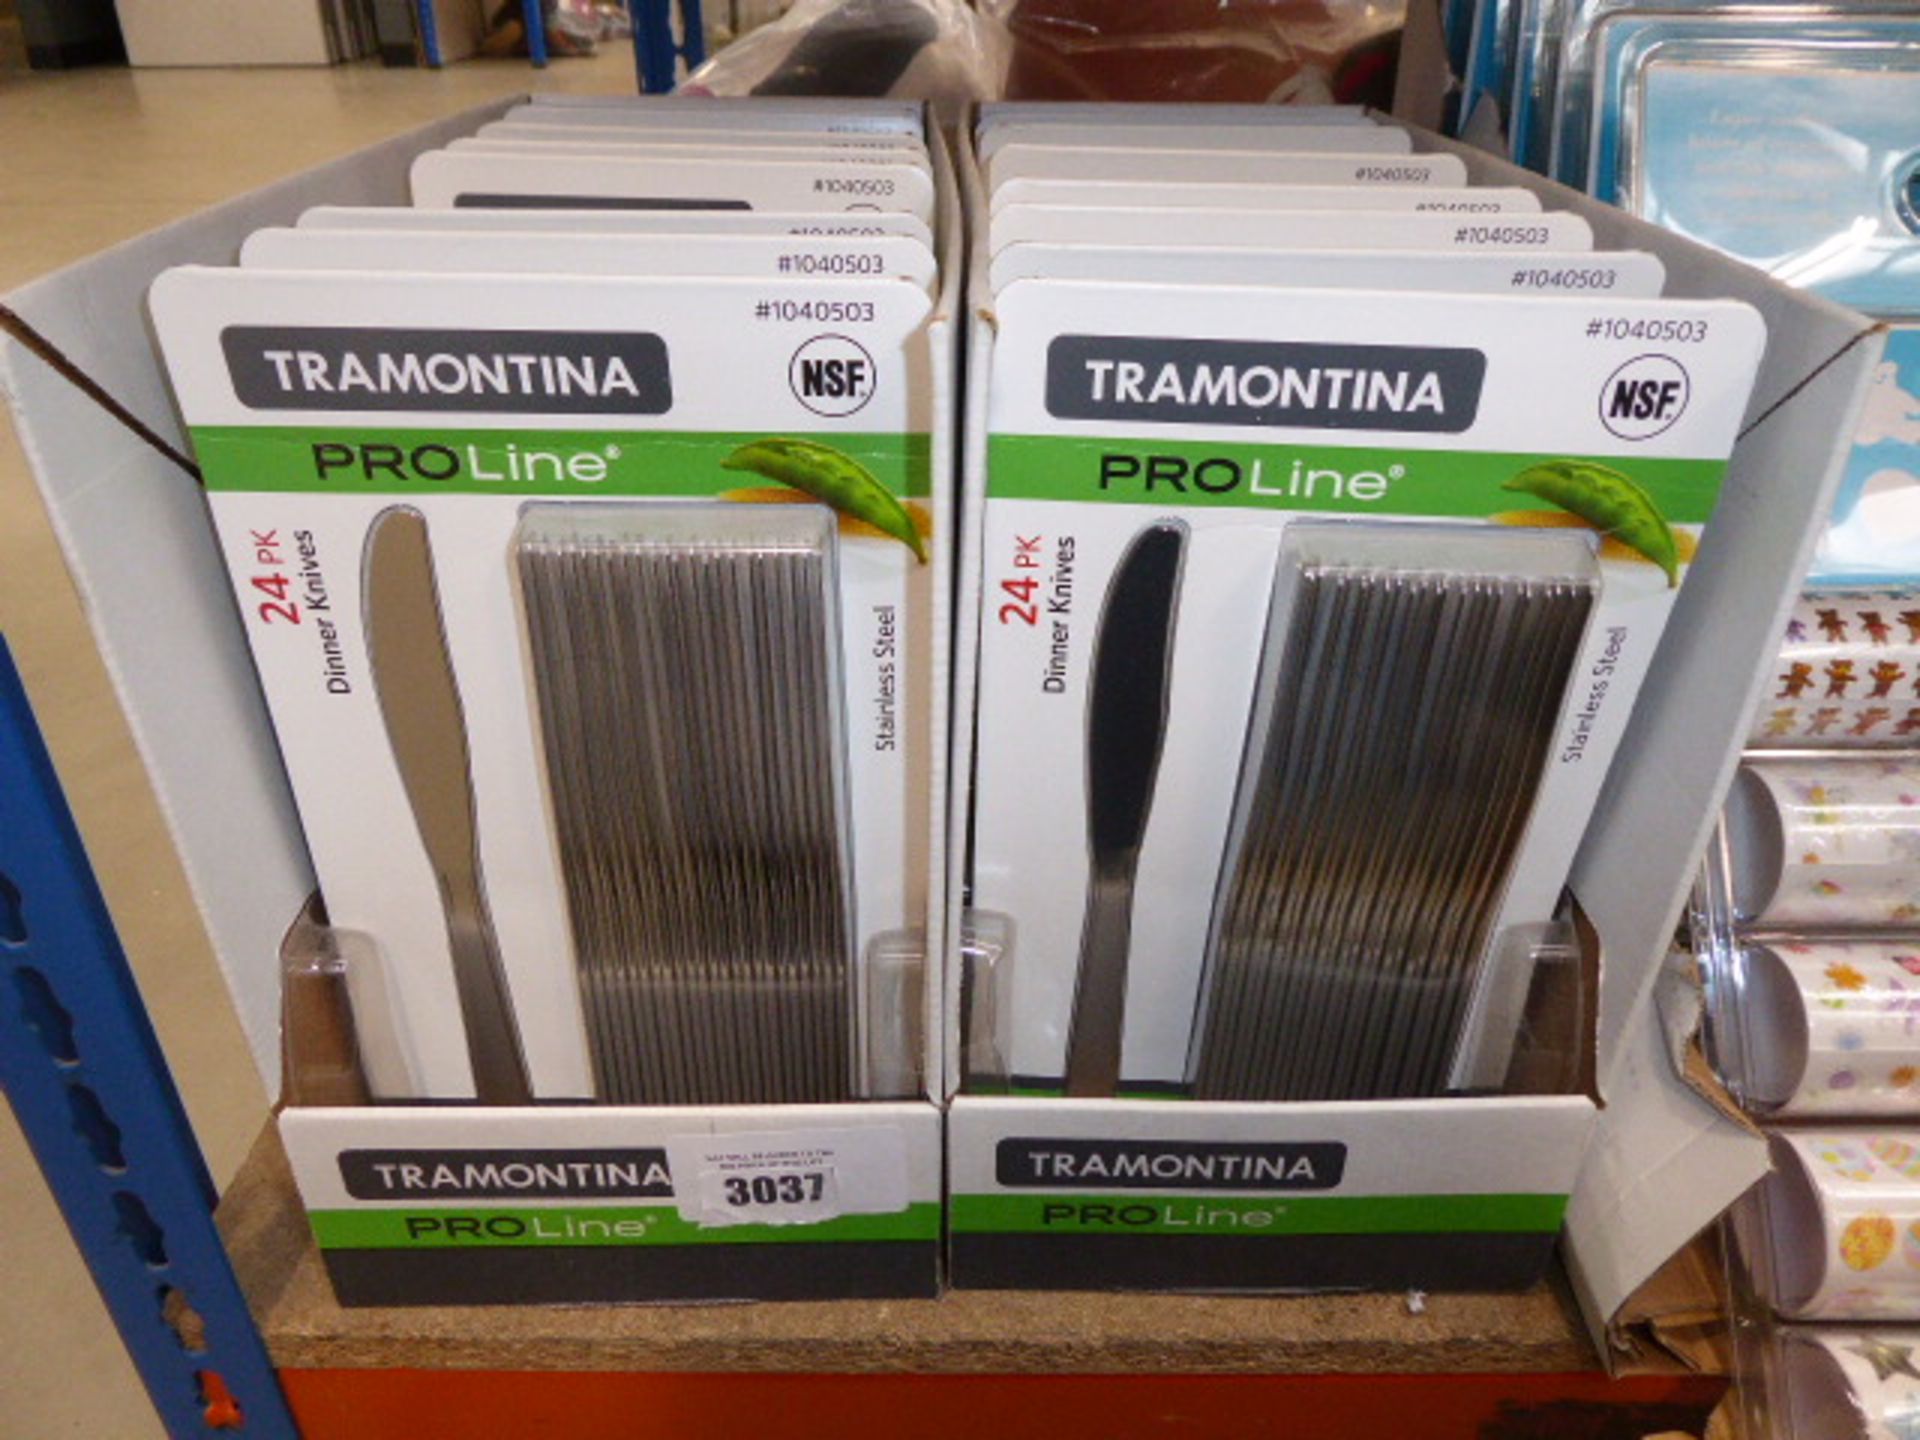 2 trays of Tramontina pro line dinner knives